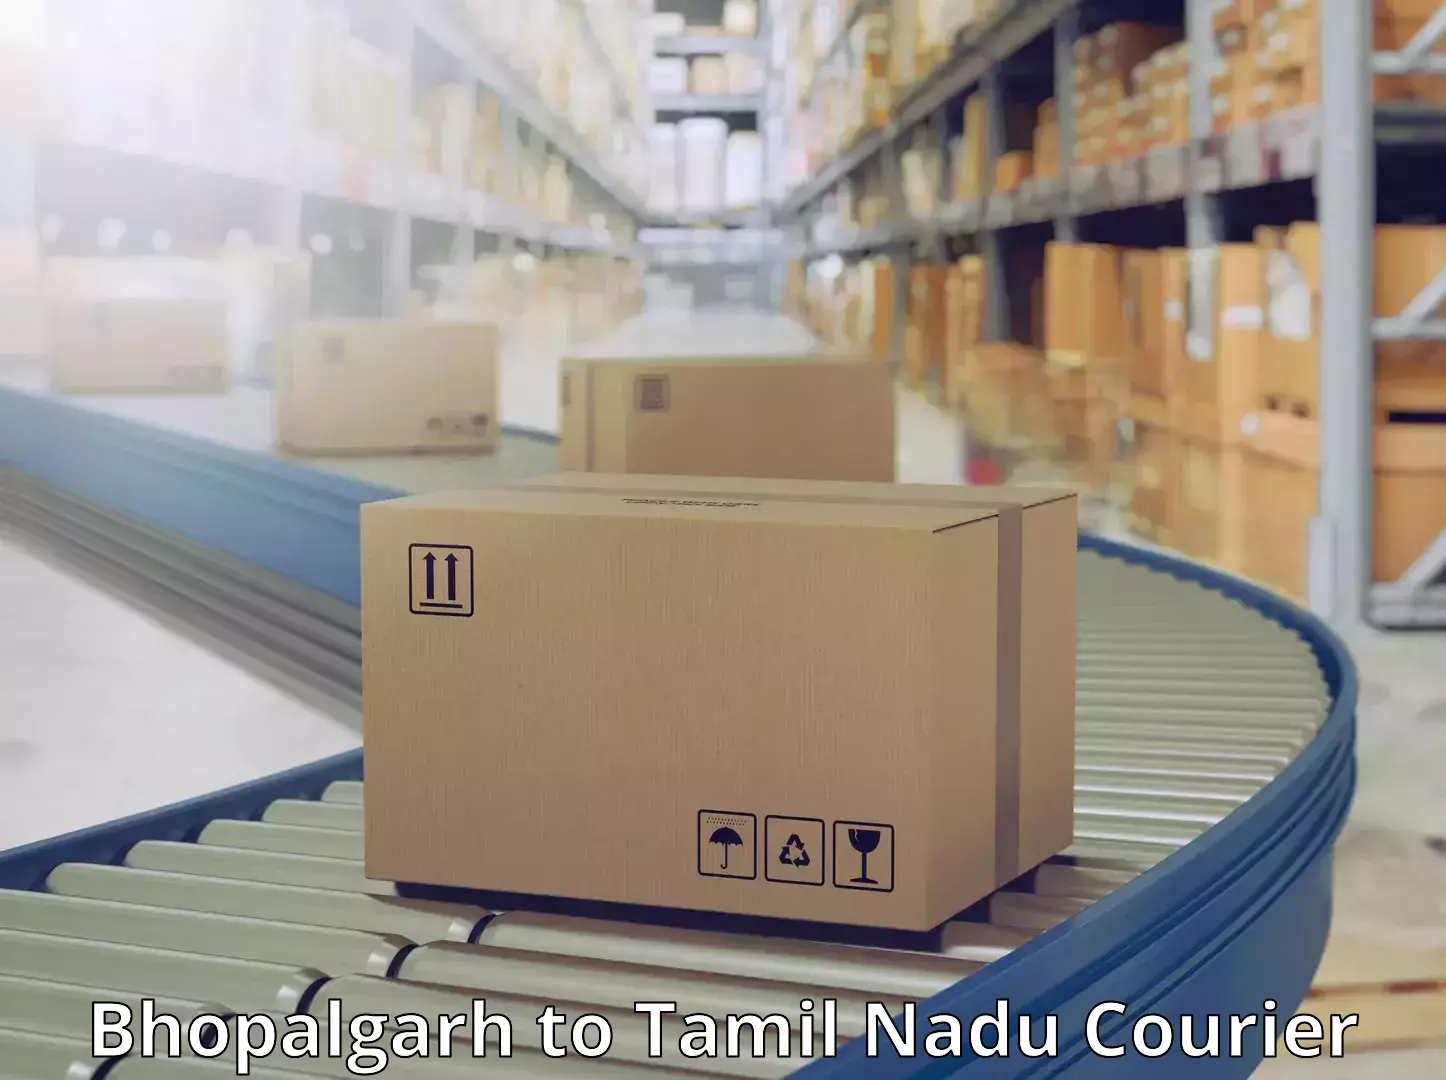 Comprehensive shipping network Bhopalgarh to Tamil Nadu